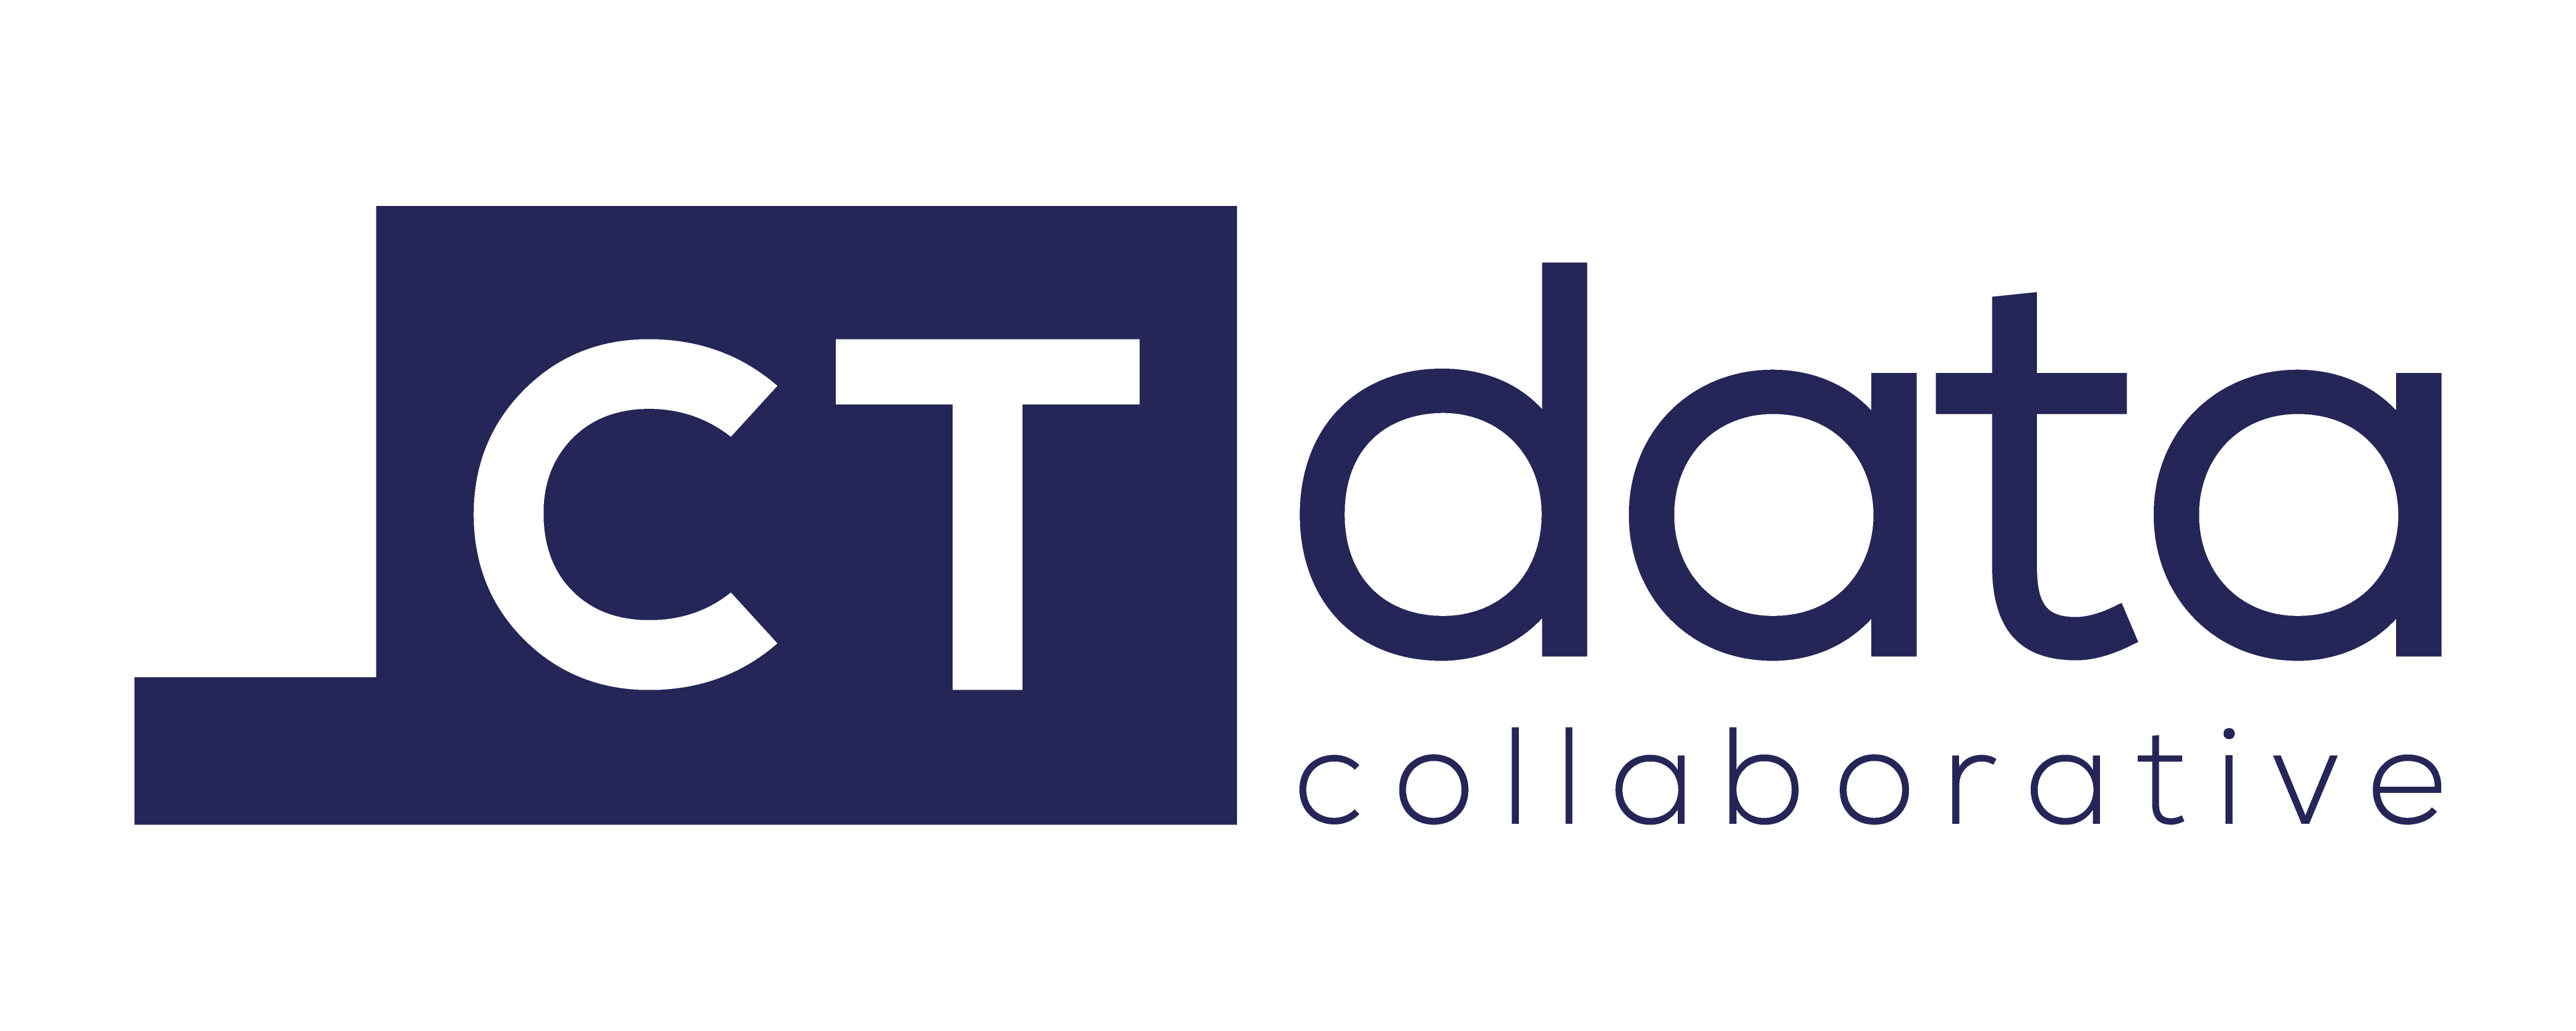 CT data collective logo